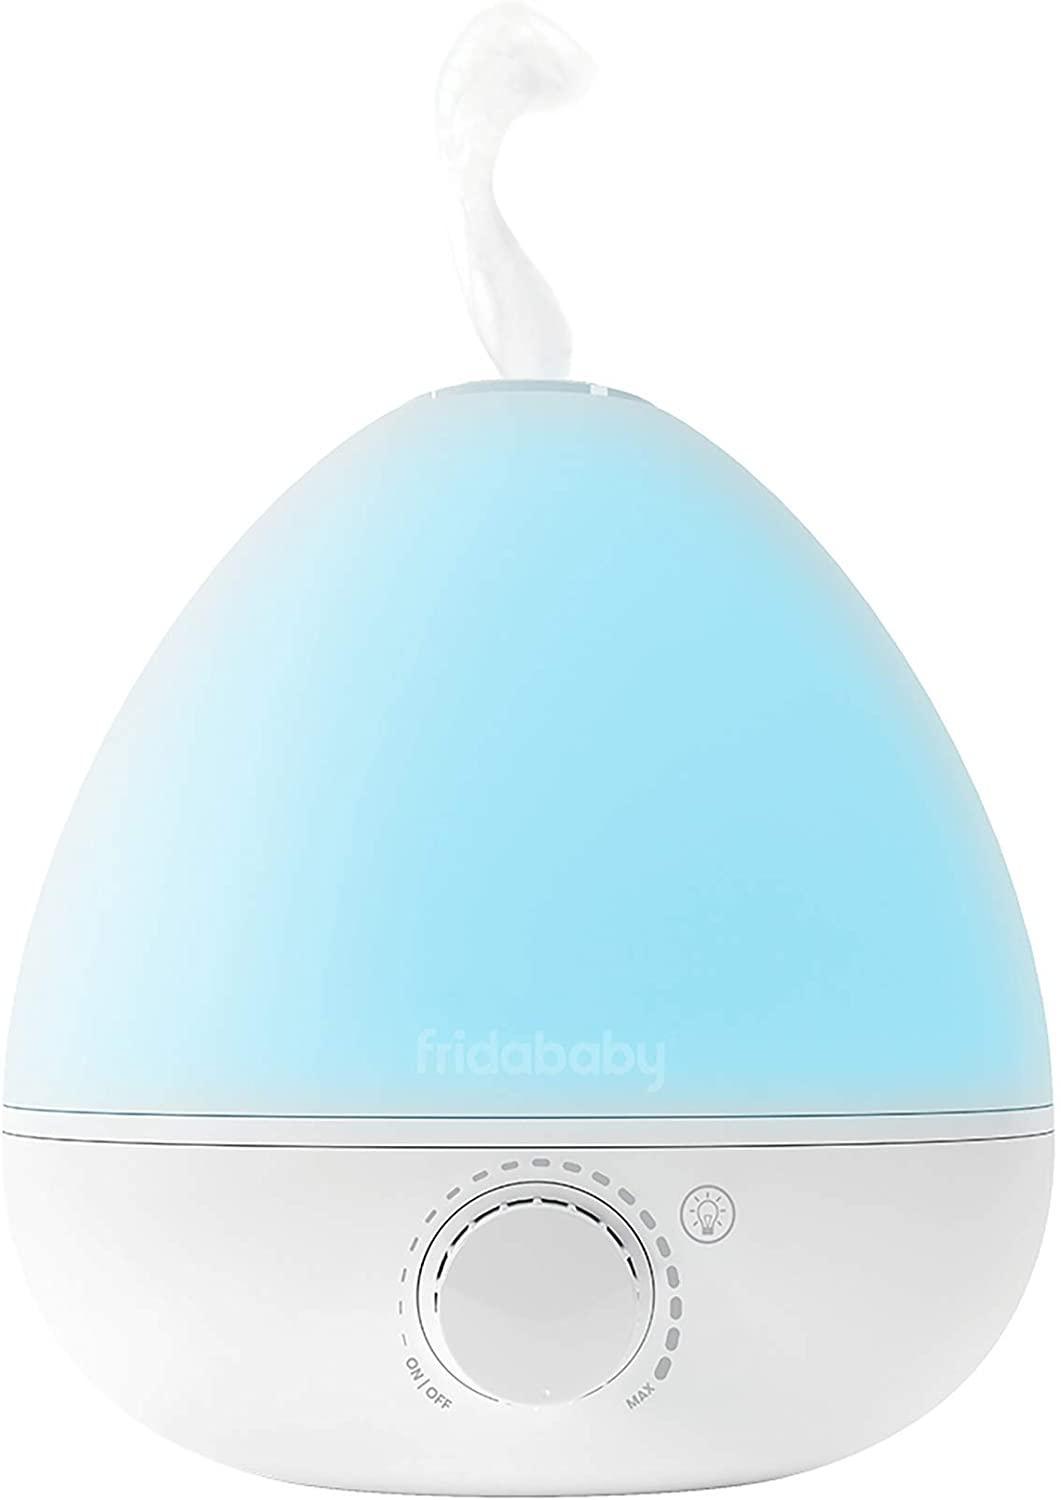 FridaBaby 3-in-1 Humidifier, Diffuser & Nightlight